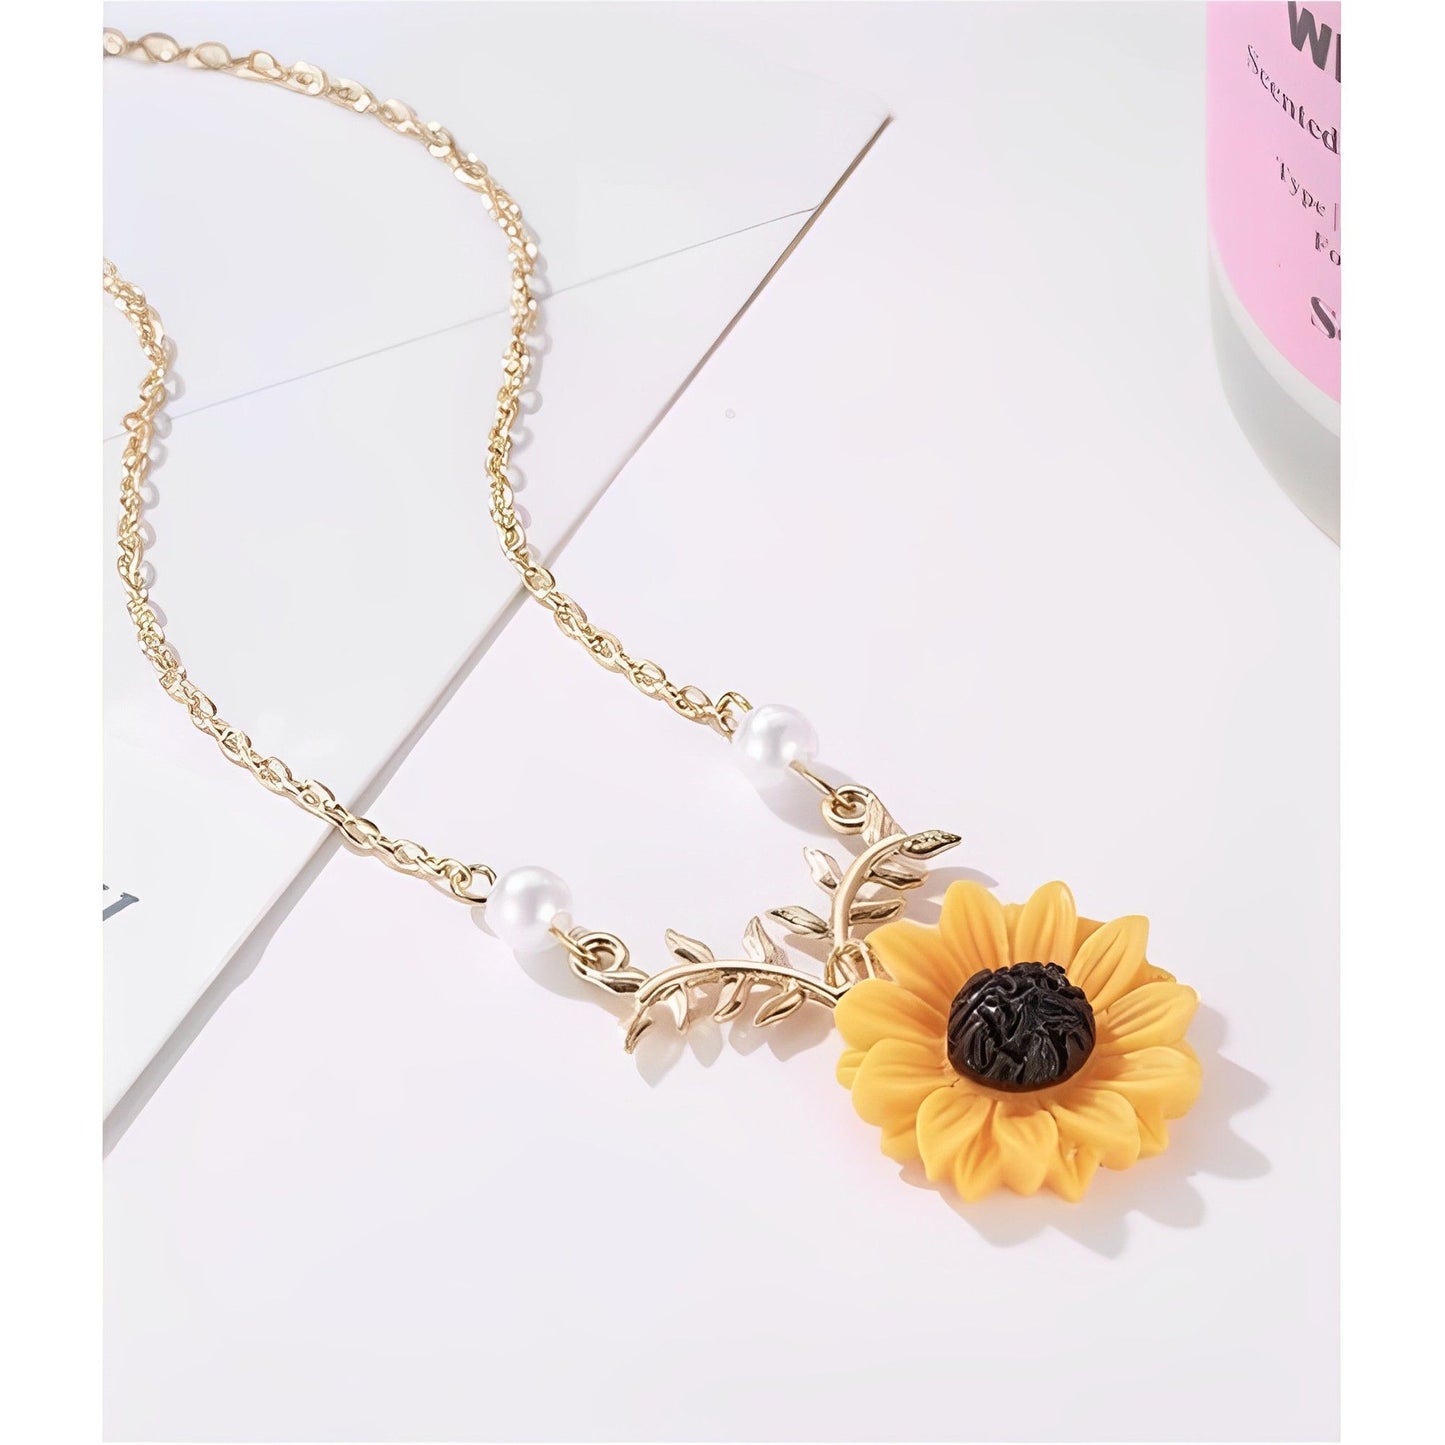 HOME BOX-Sunflower Necklace For Women & Girls